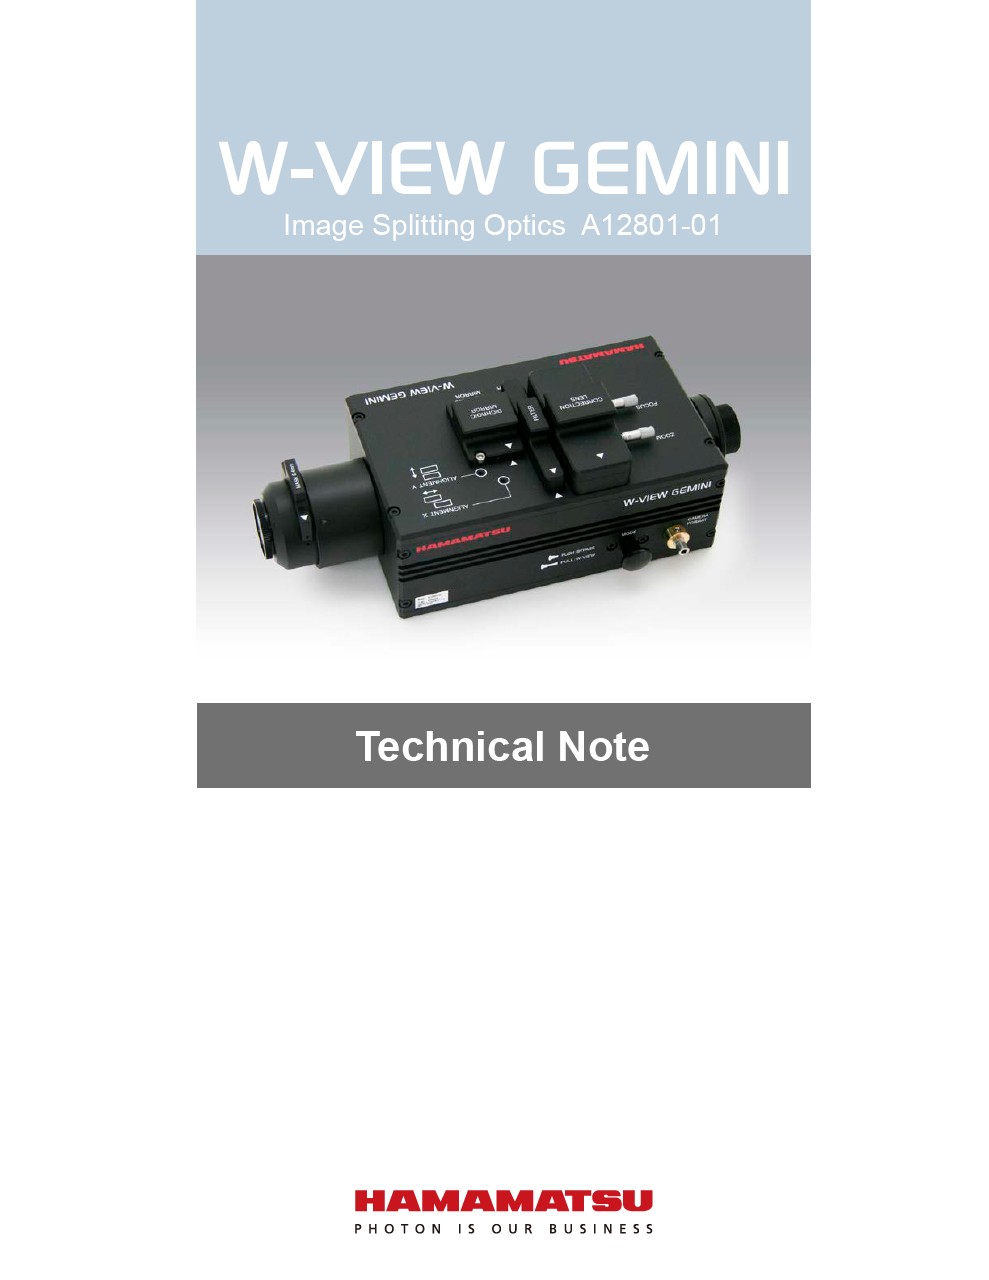 W-VIEW GEMINI Image Splitting Optics A12801-01 Technical Note